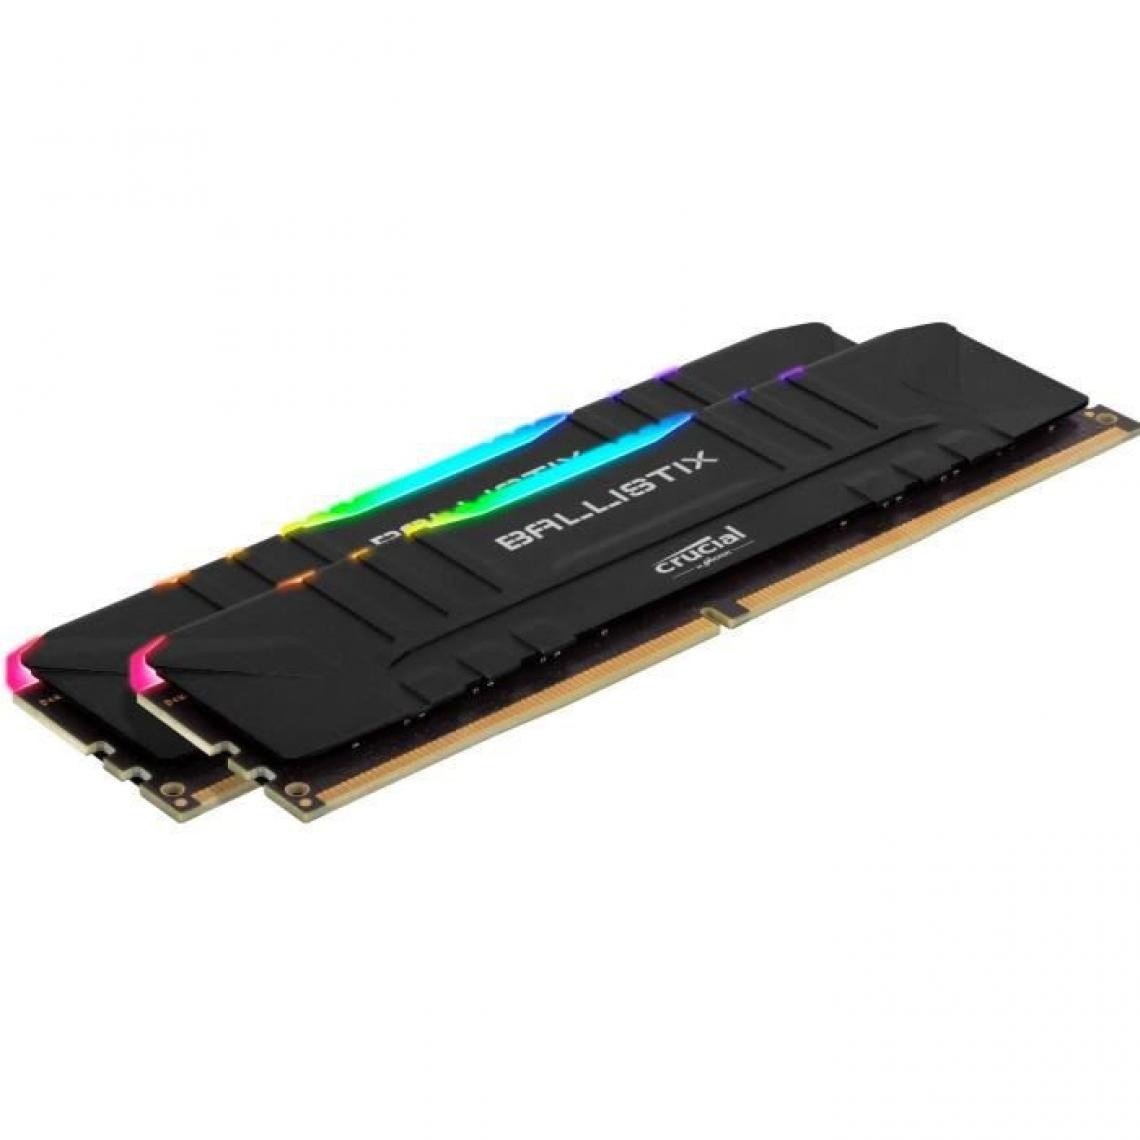 Ballistix - BALLISTIX - Mémoire PC RAM RGB - 16Go (2 x 8Go) - 3200MHz - DDR4 - CAS 16 (BL2K8G32C16U4BL) - RAM PC Fixe